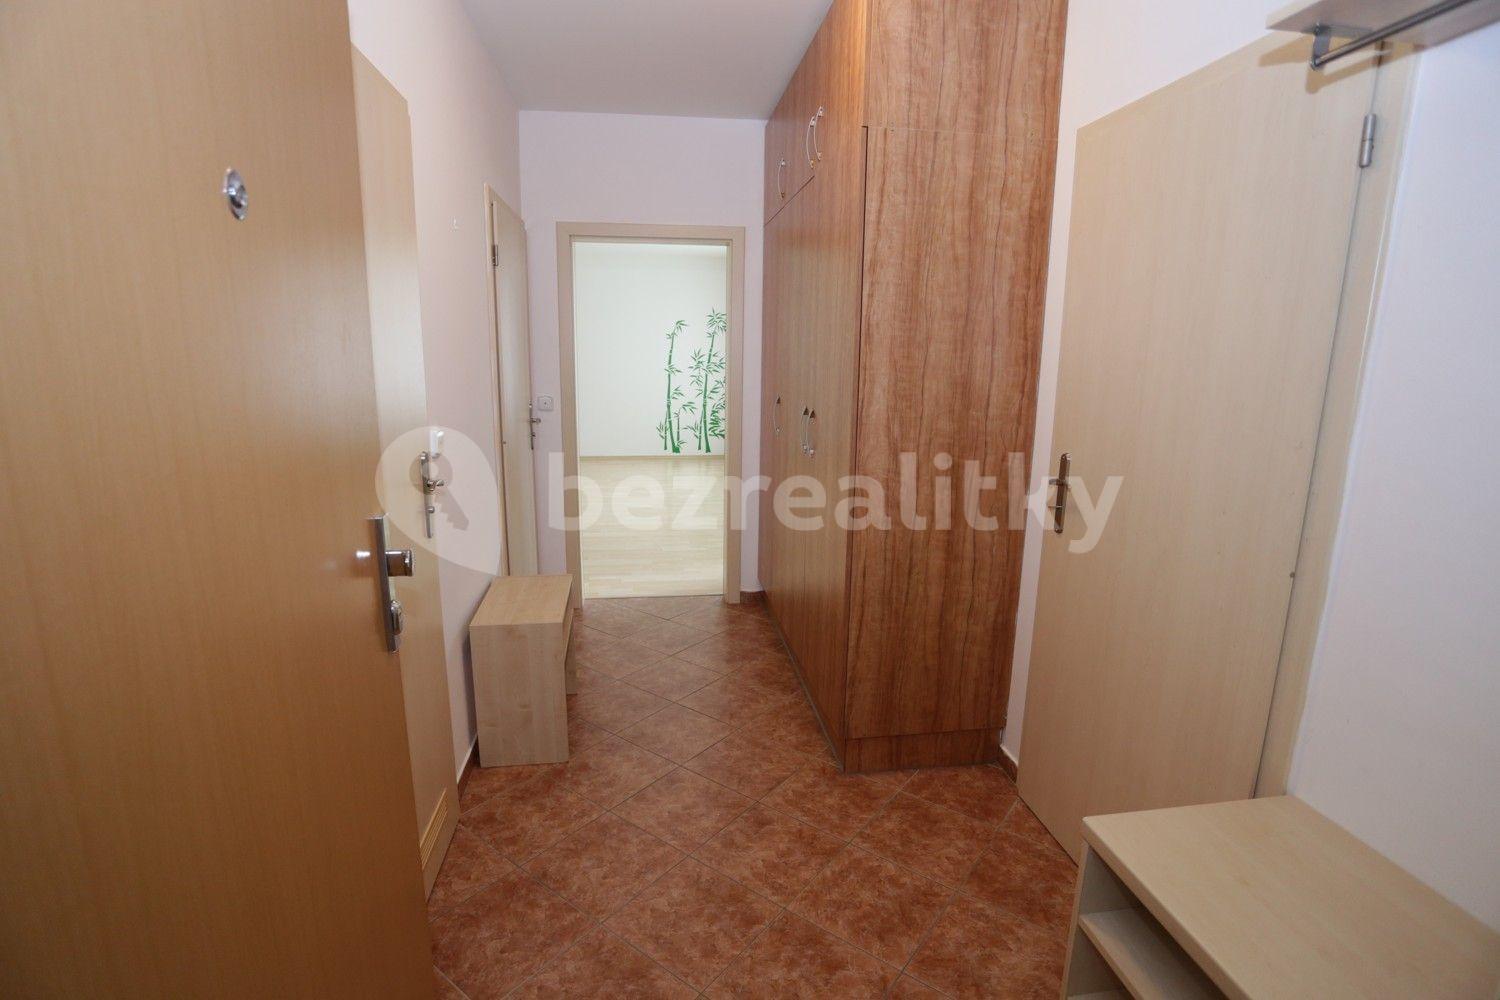 1 bedroom with open-plan kitchen flat to rent, 54 m², Zrzavého, Prague, Prague